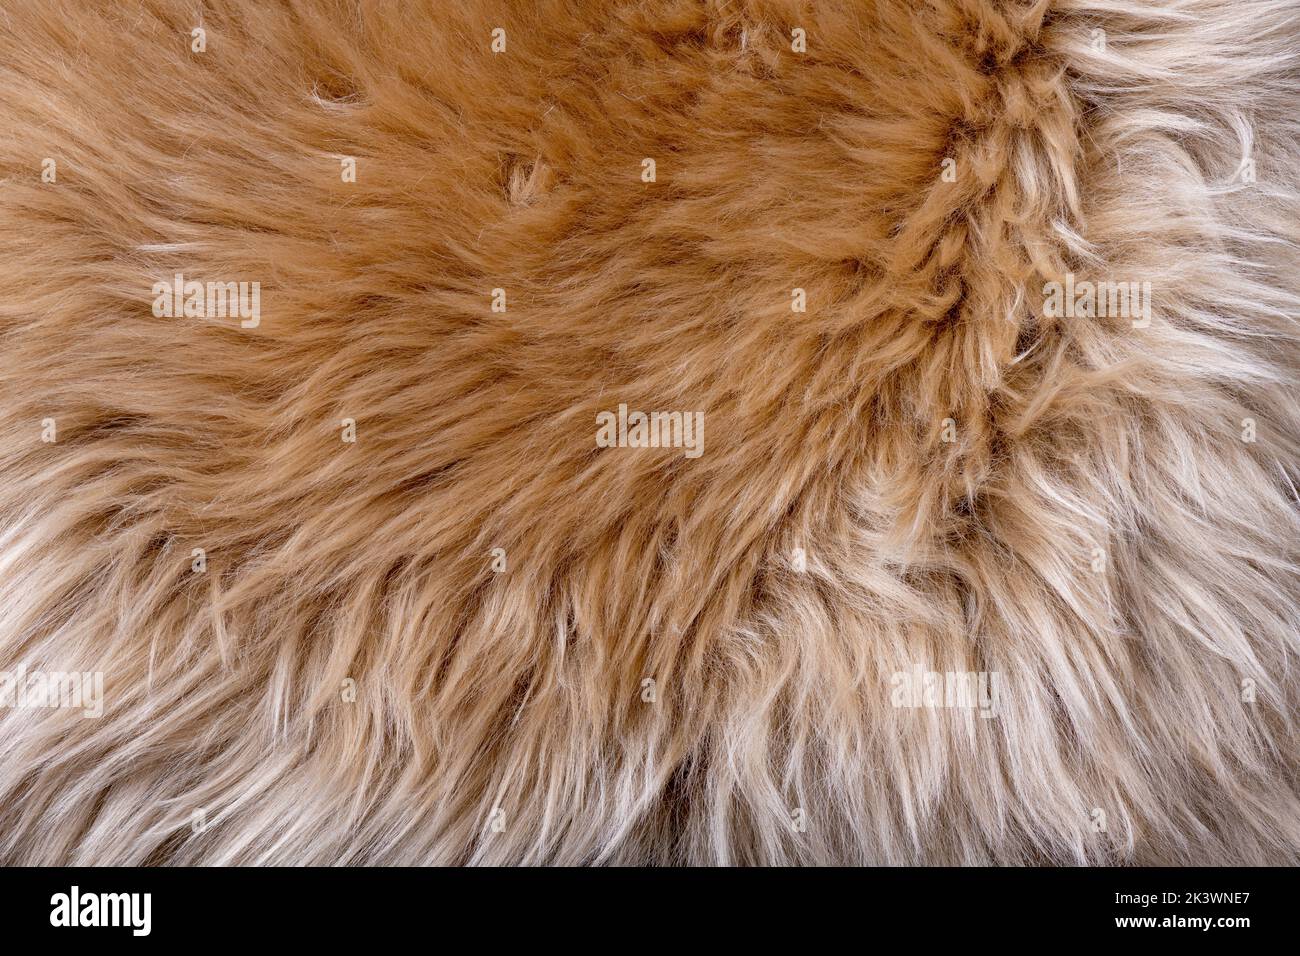 Fur texture top view. Brown fur background. Fur pattern. Texture of brown shaggy fur. Wool texture. Flaffy sheepskin fur close up Stock Photo